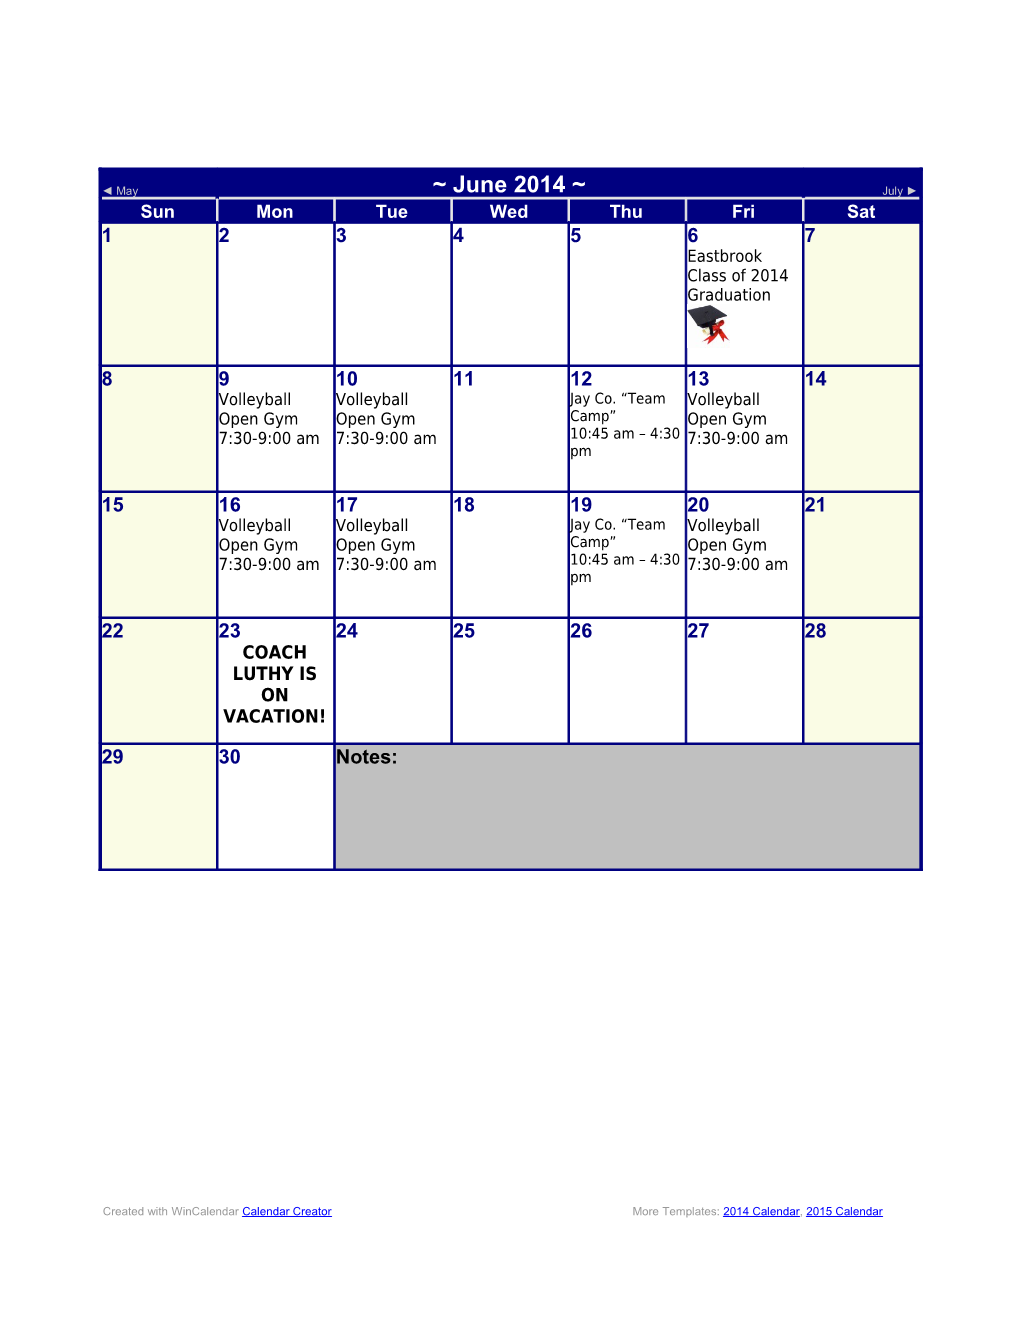 Created with Wincalendar Calendar Creator More Templates: 2014 Calendar, 2015 Calendar